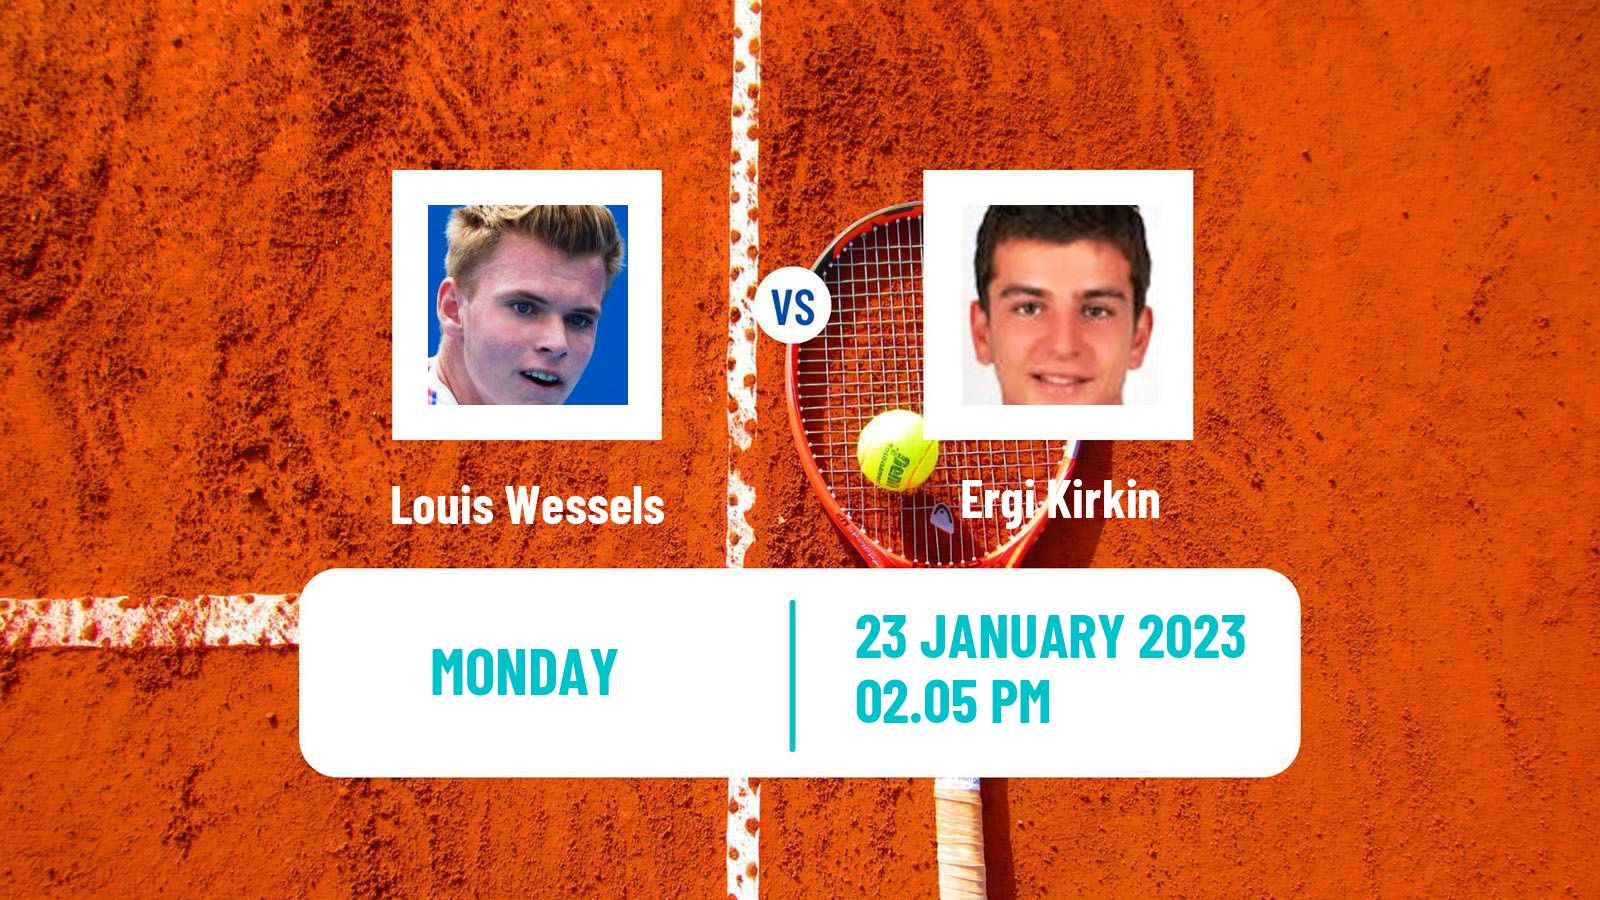 Tennis ATP Challenger Louis Wessels - Ergi Kirkin